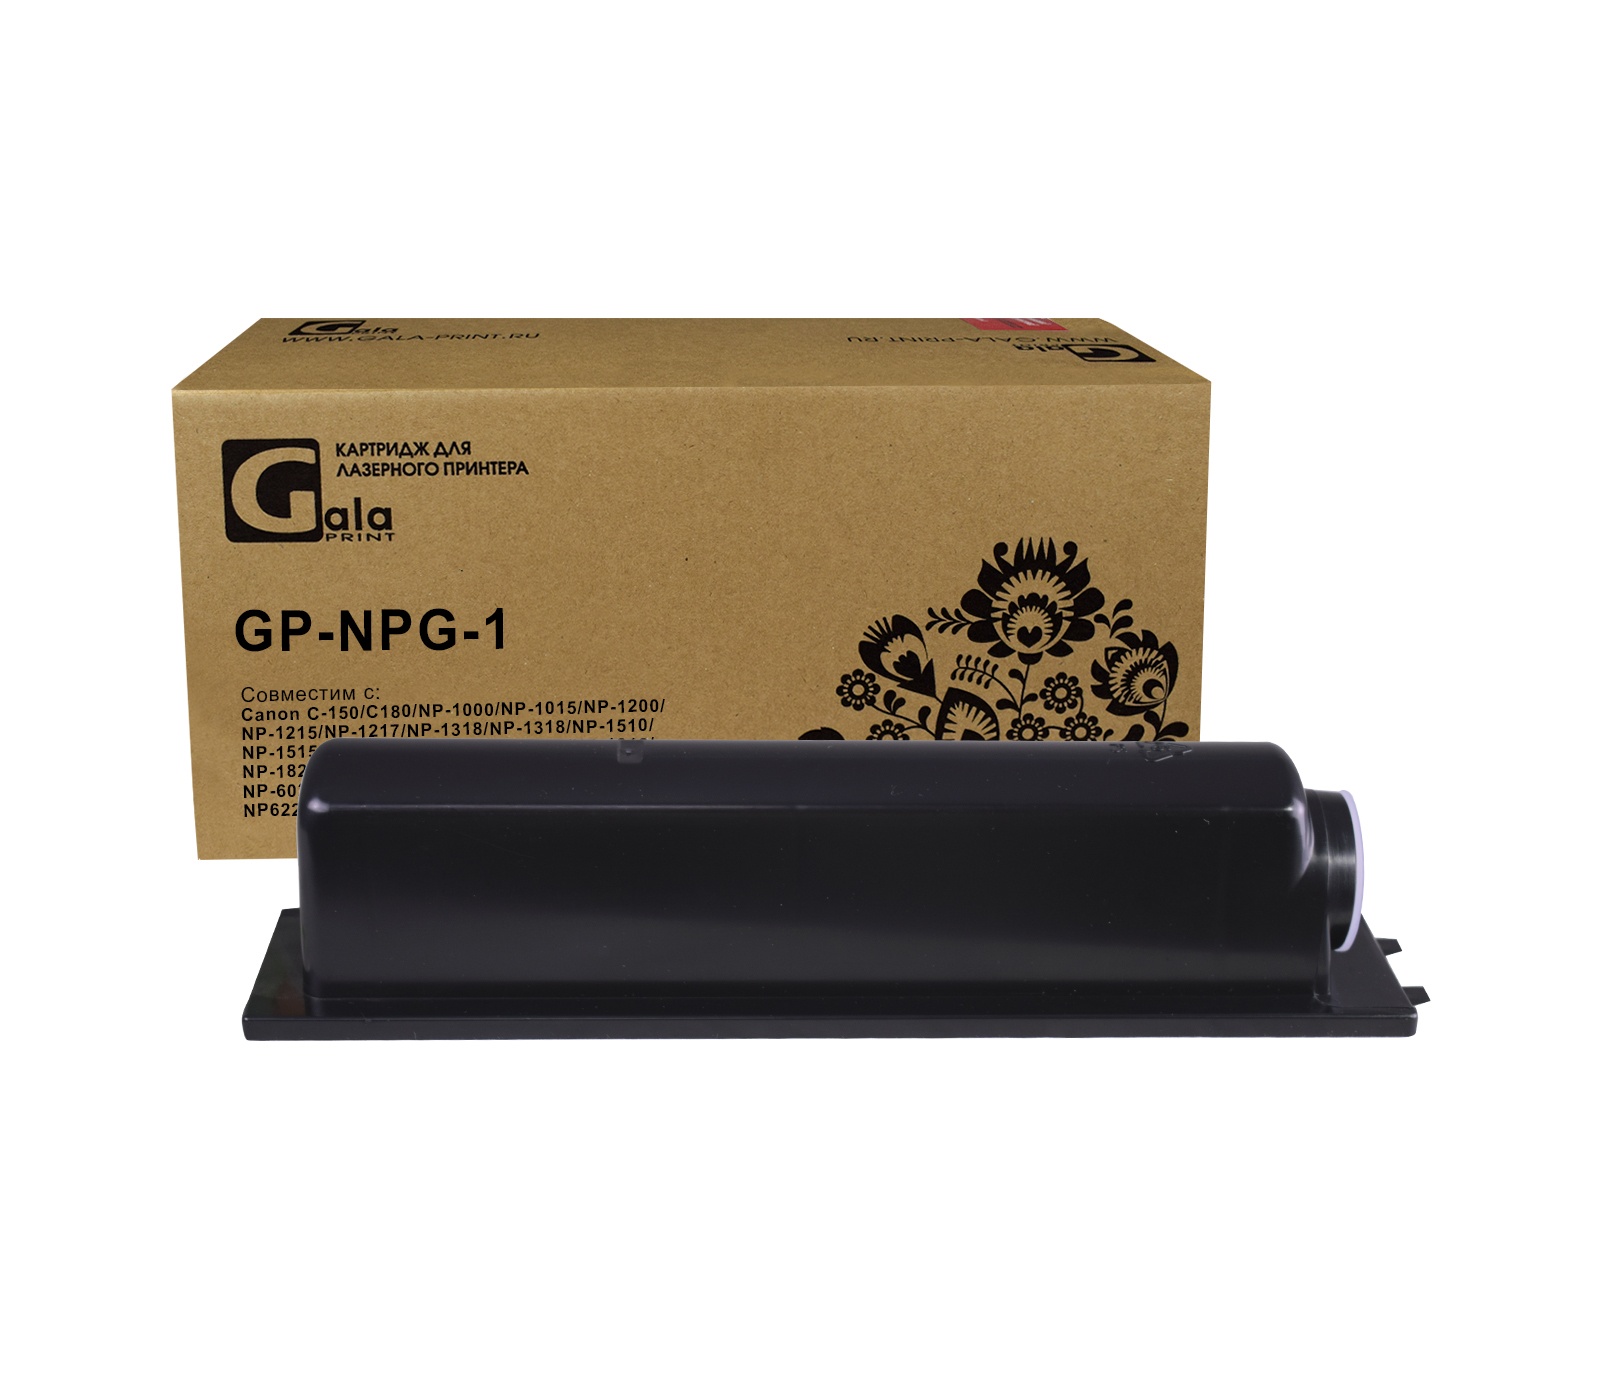 Картридж GP-NPG-1 для принтеров Canon GalaPrint